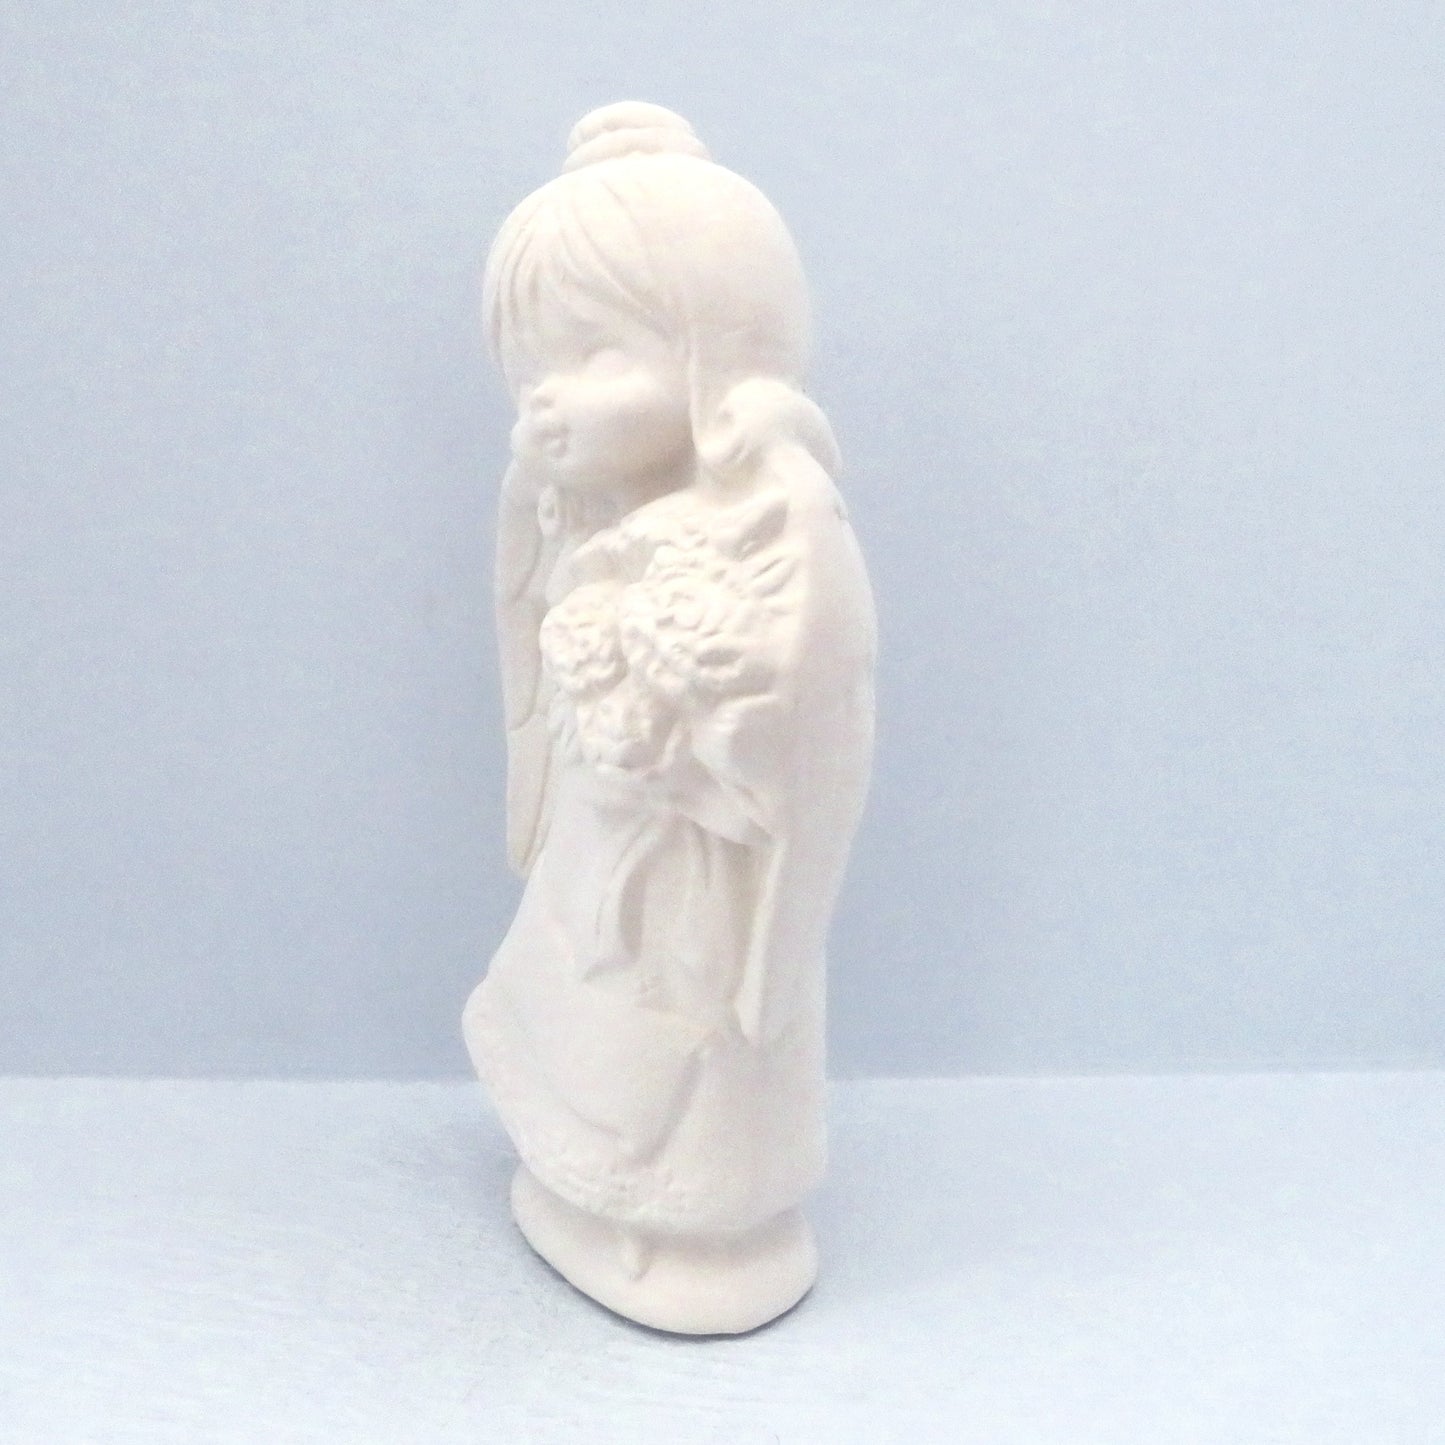 Handmade Ready to Paint Ceramic Angel Figurine Holding Flowers